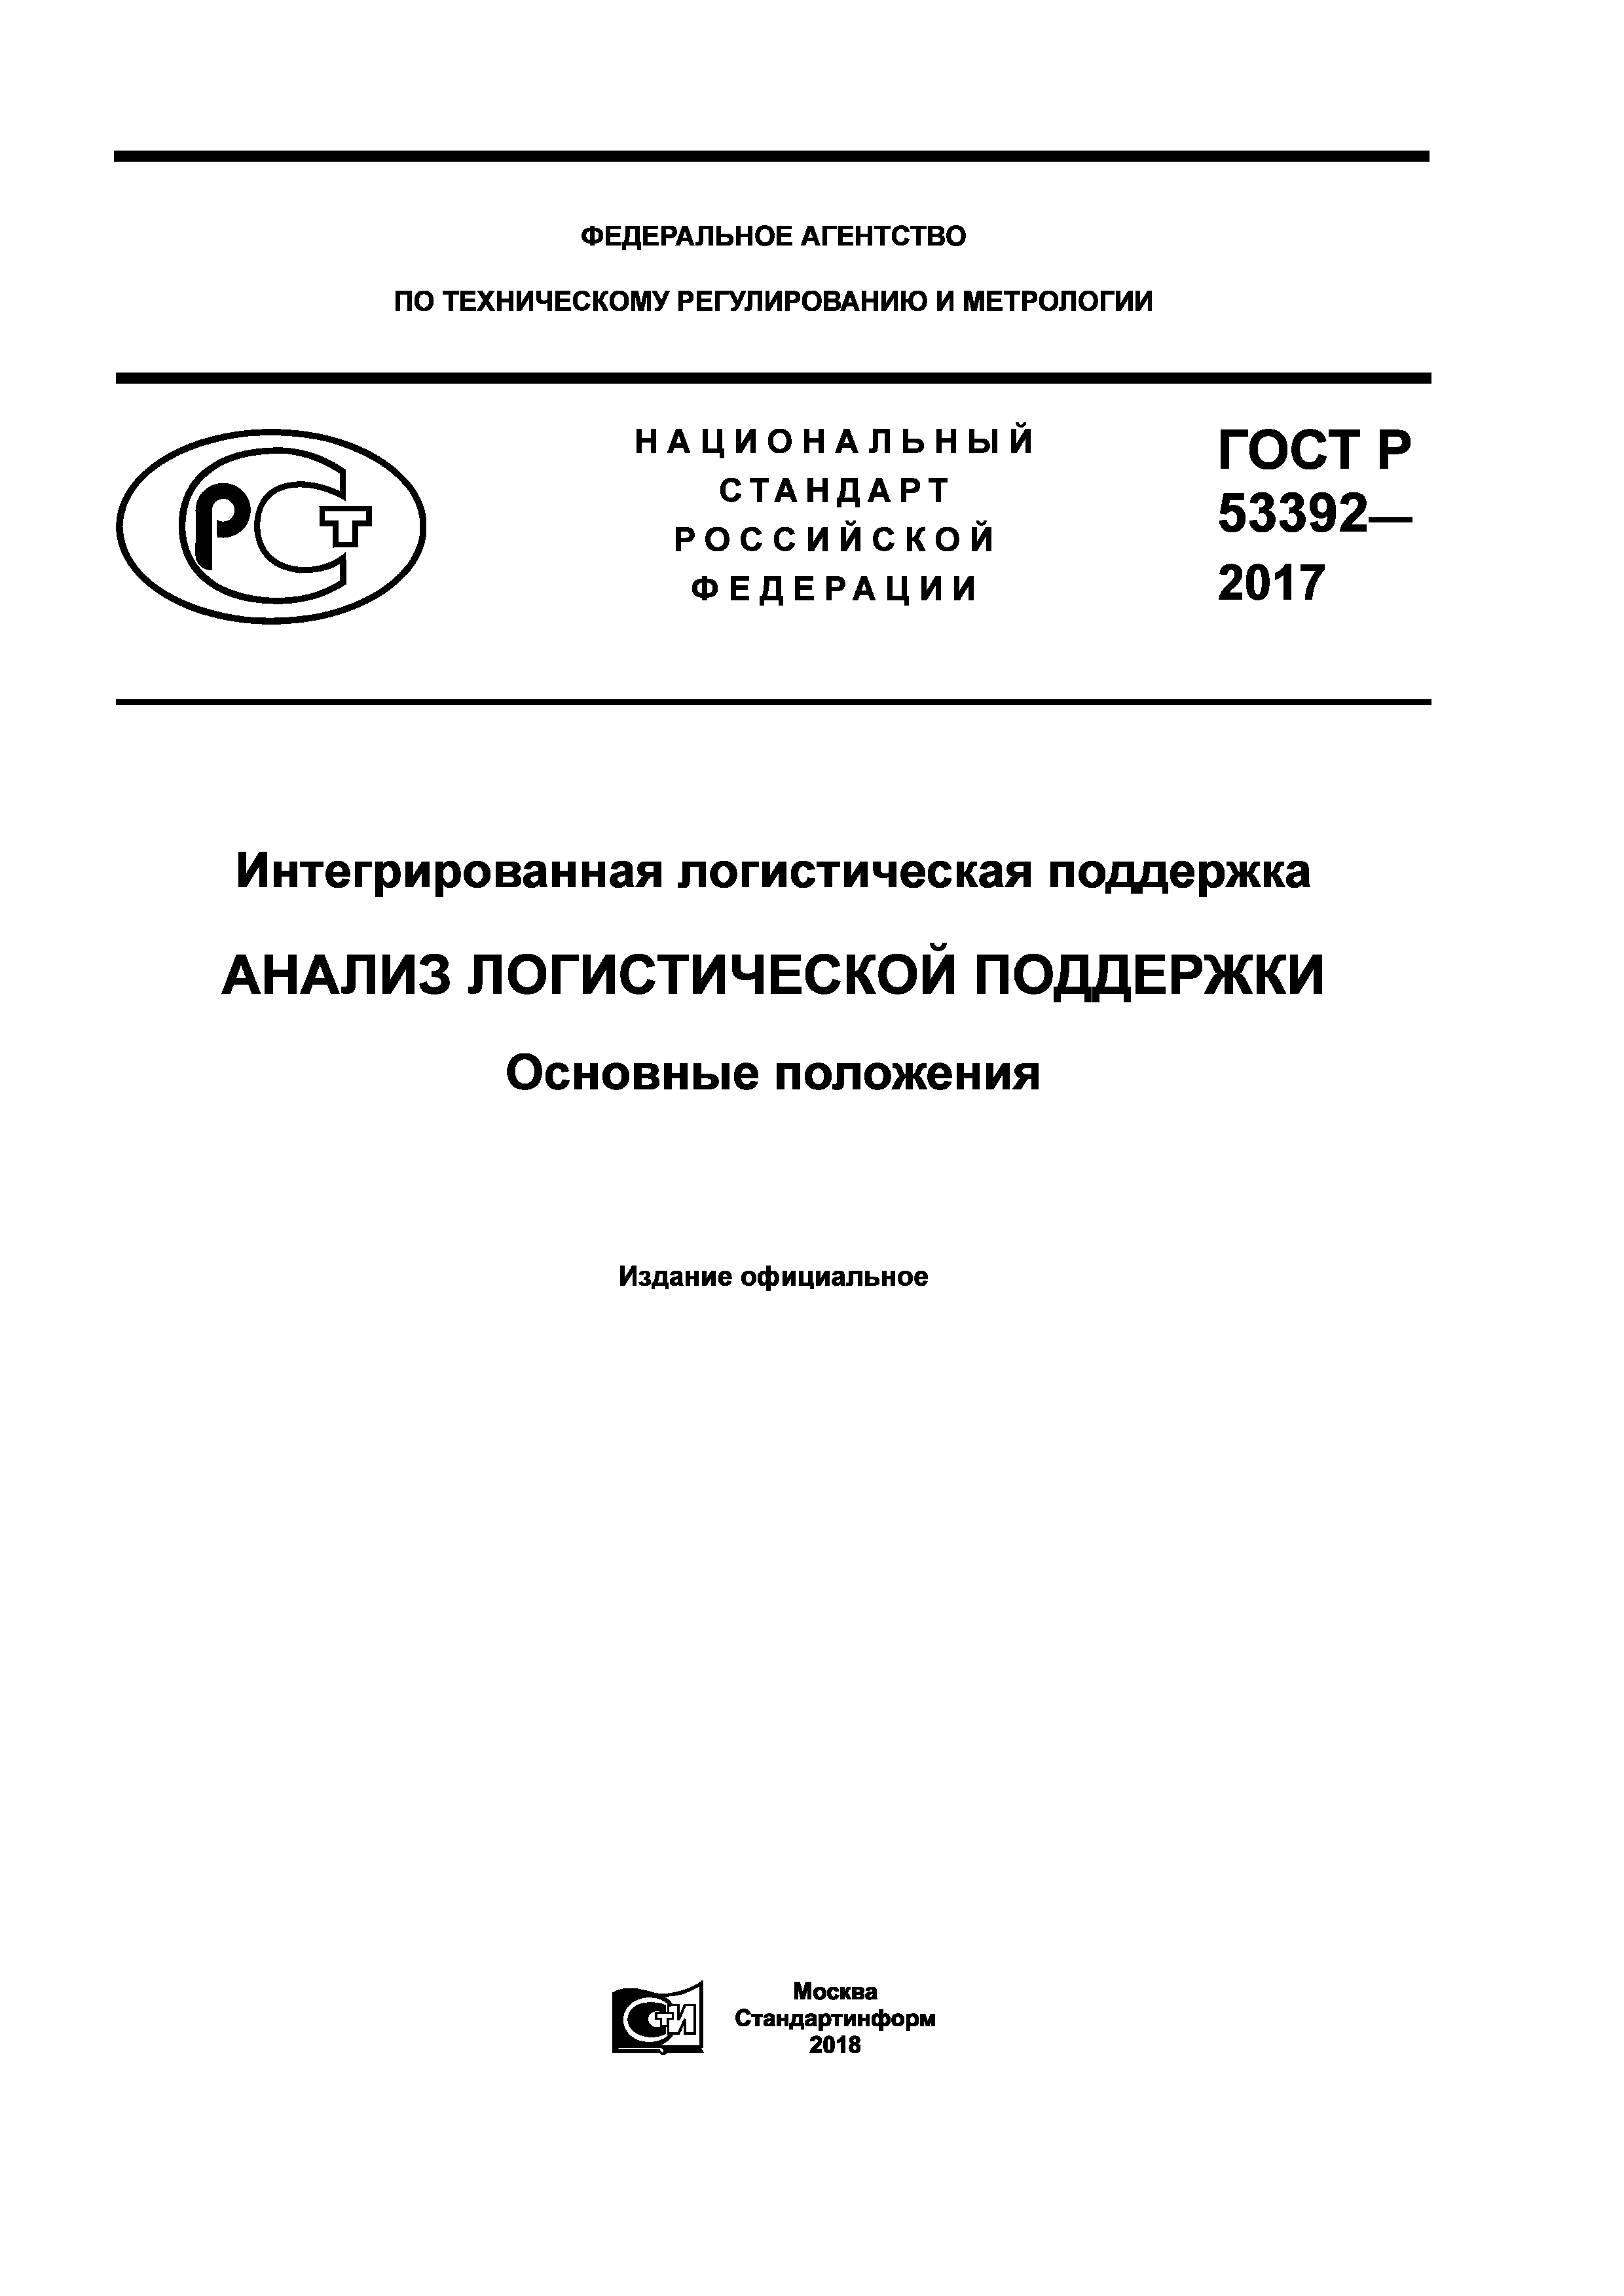 ГОСТ Р 53392-2017